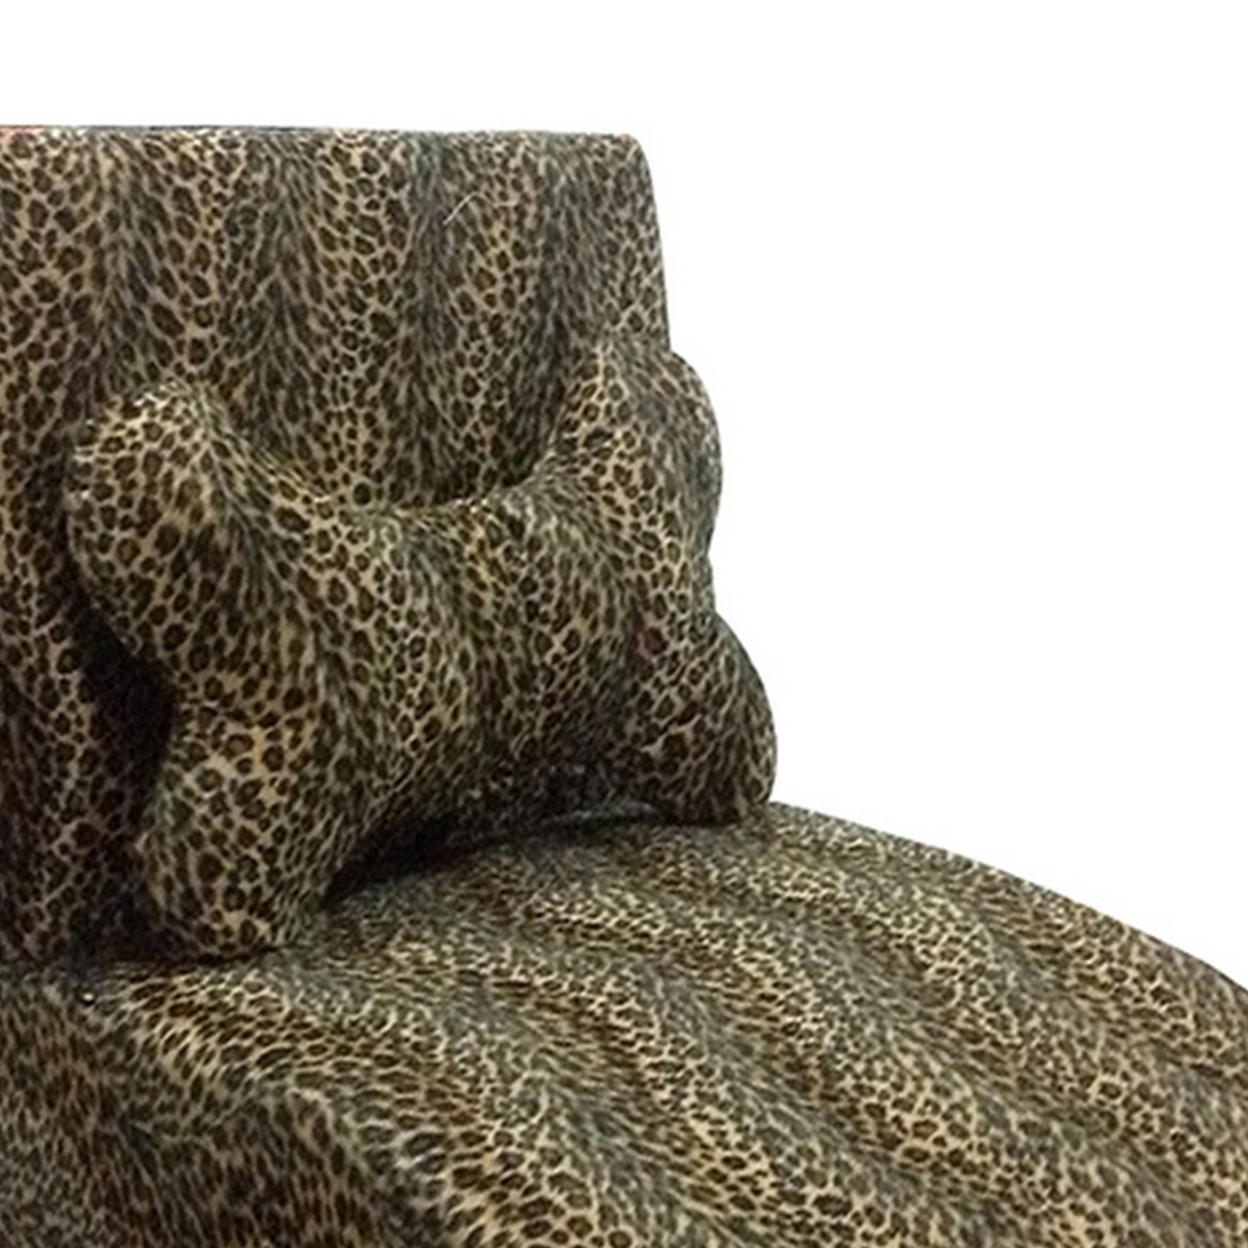 Pet Furniture With Leopard Print Fabric And Block Feet, Black And Yellow- Saltoro Sherpi